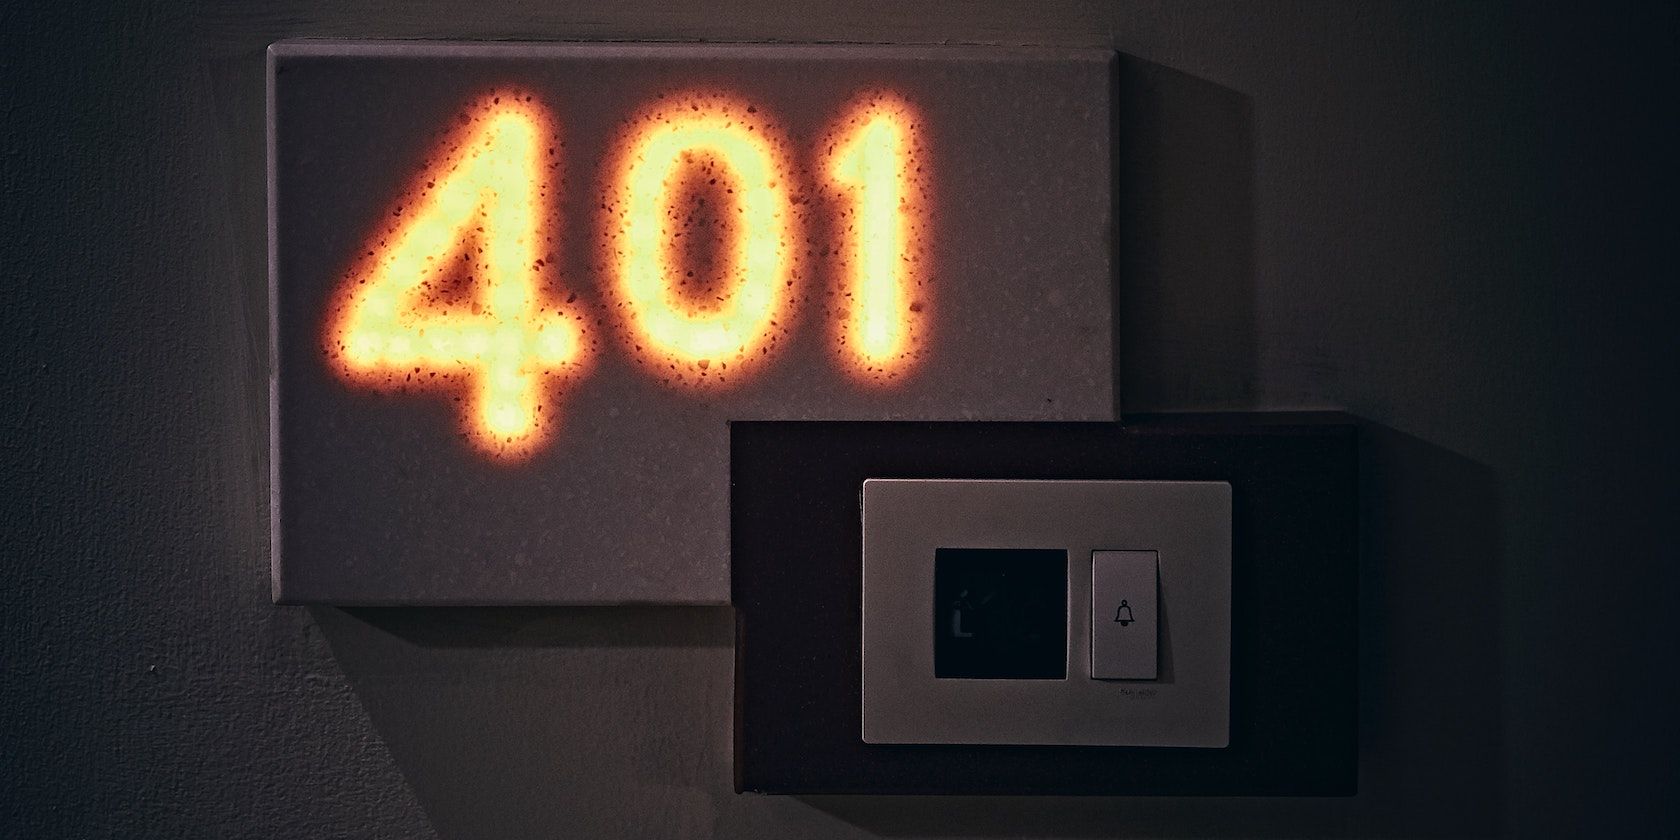 An image of an illuminated door number reading '401'